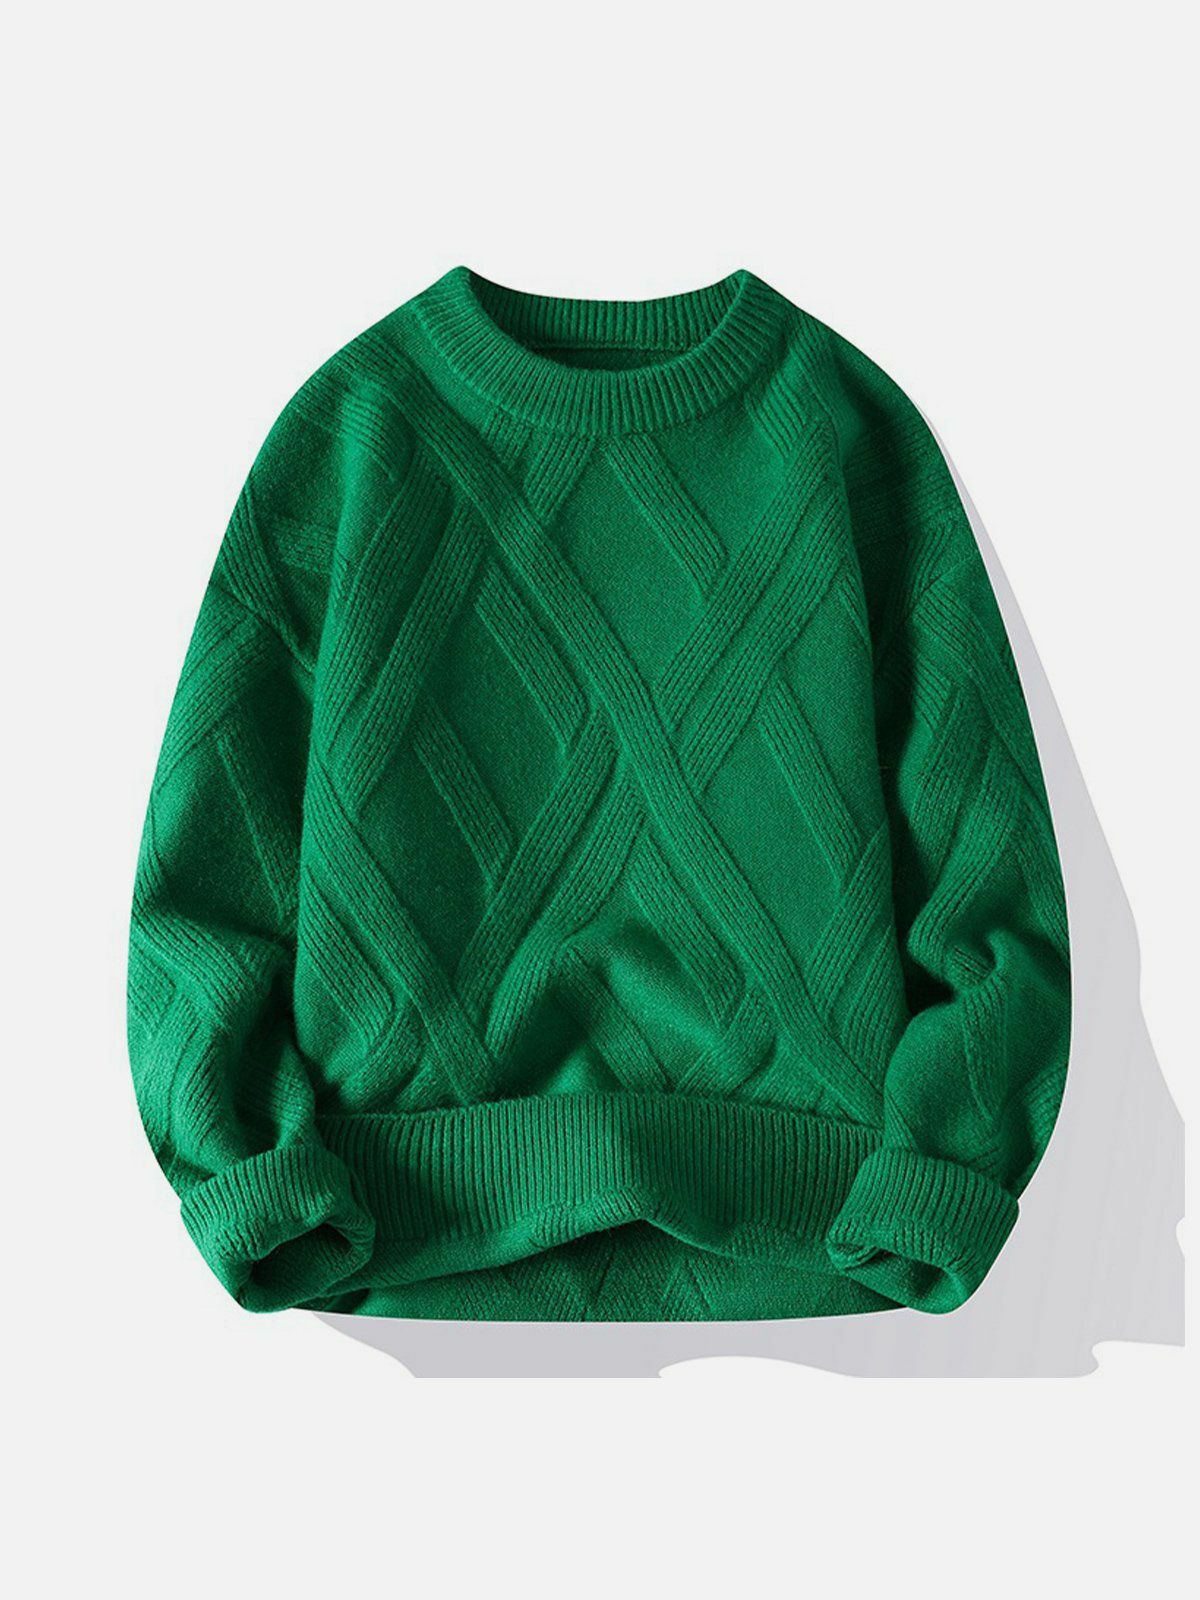 jacquard knit streetwear sweater edgy & retro style 5126